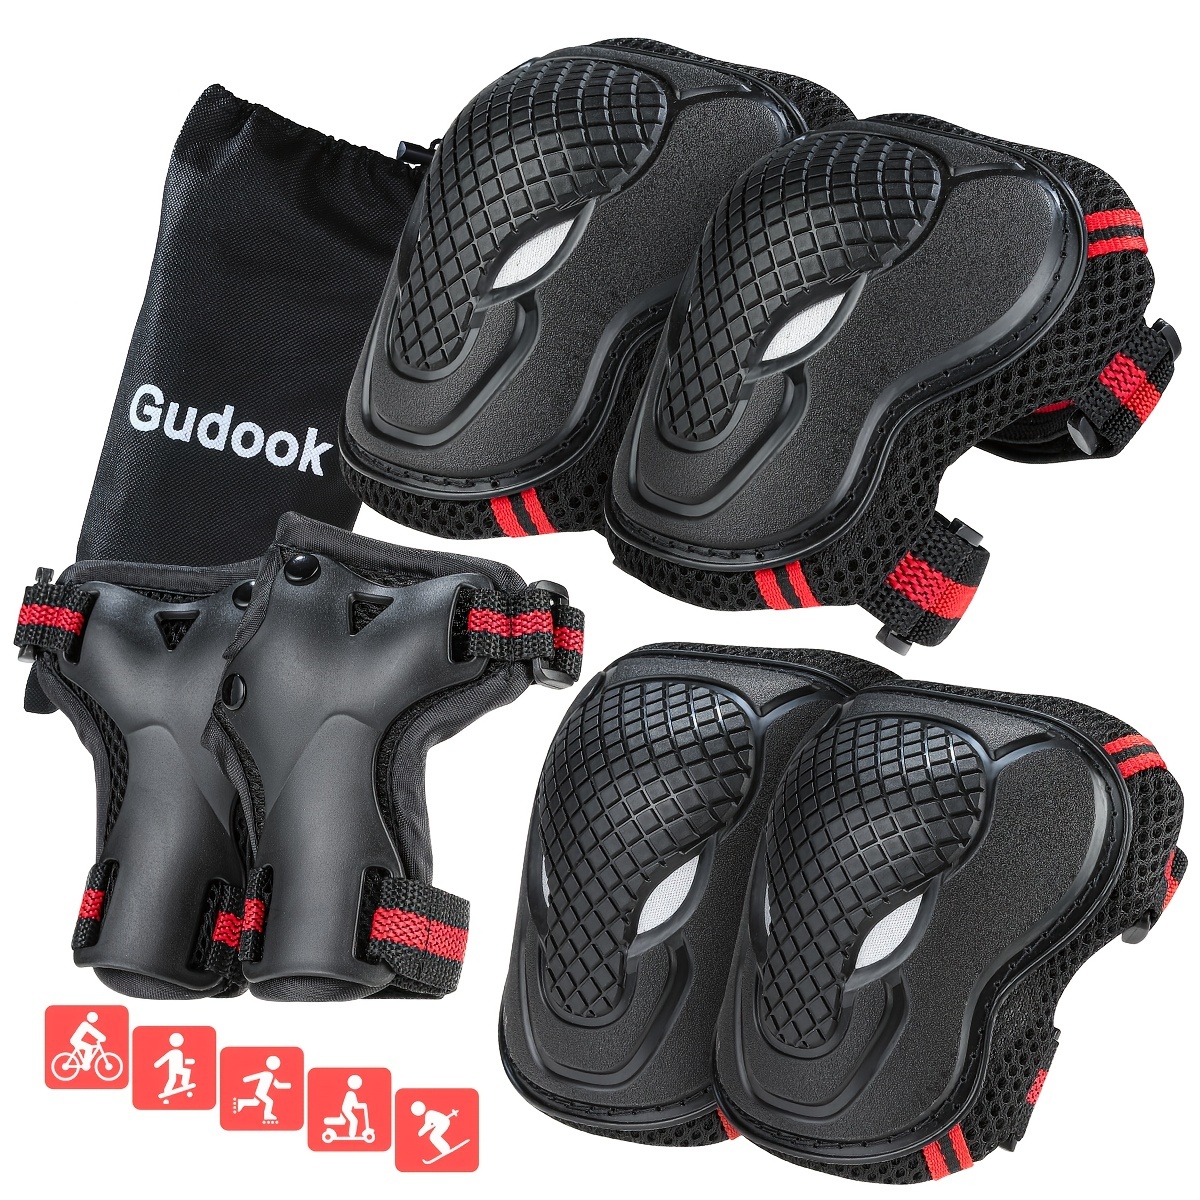 6pcs Kids Elbow Wrist Knee Pads Protective Gear Set Skate Roller Cycling  Bike